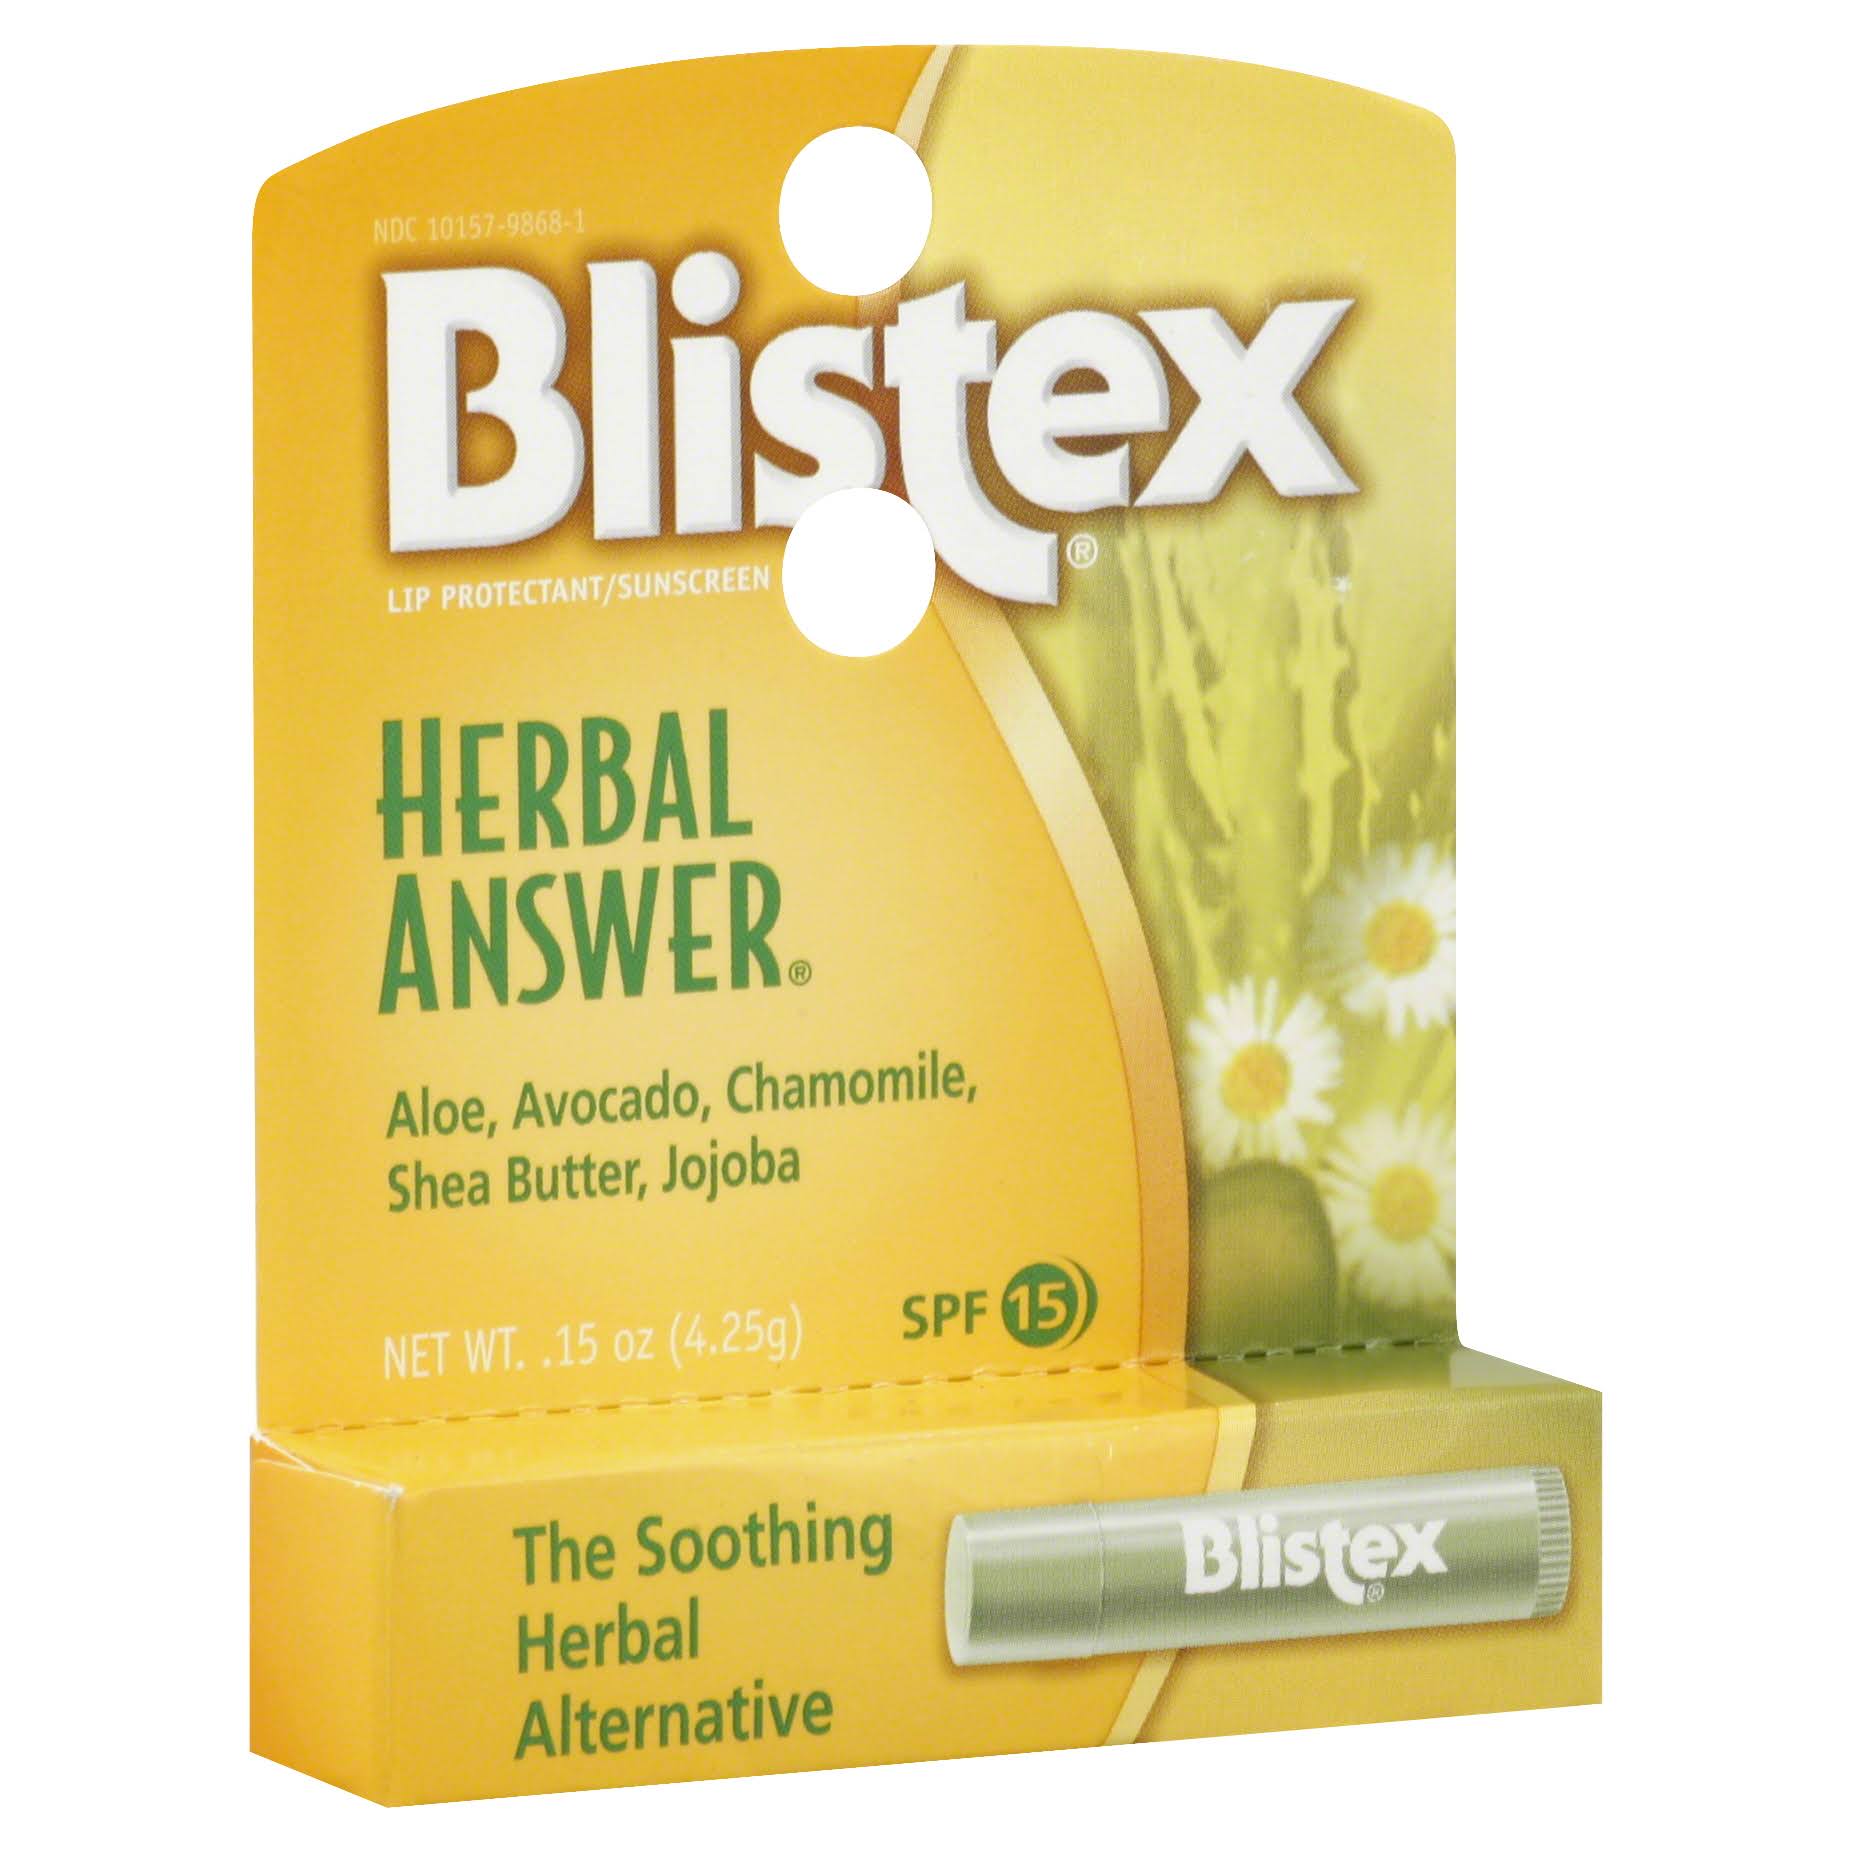 Blistex Herbal Answer Lip Protectant - SPF 15, 5ml